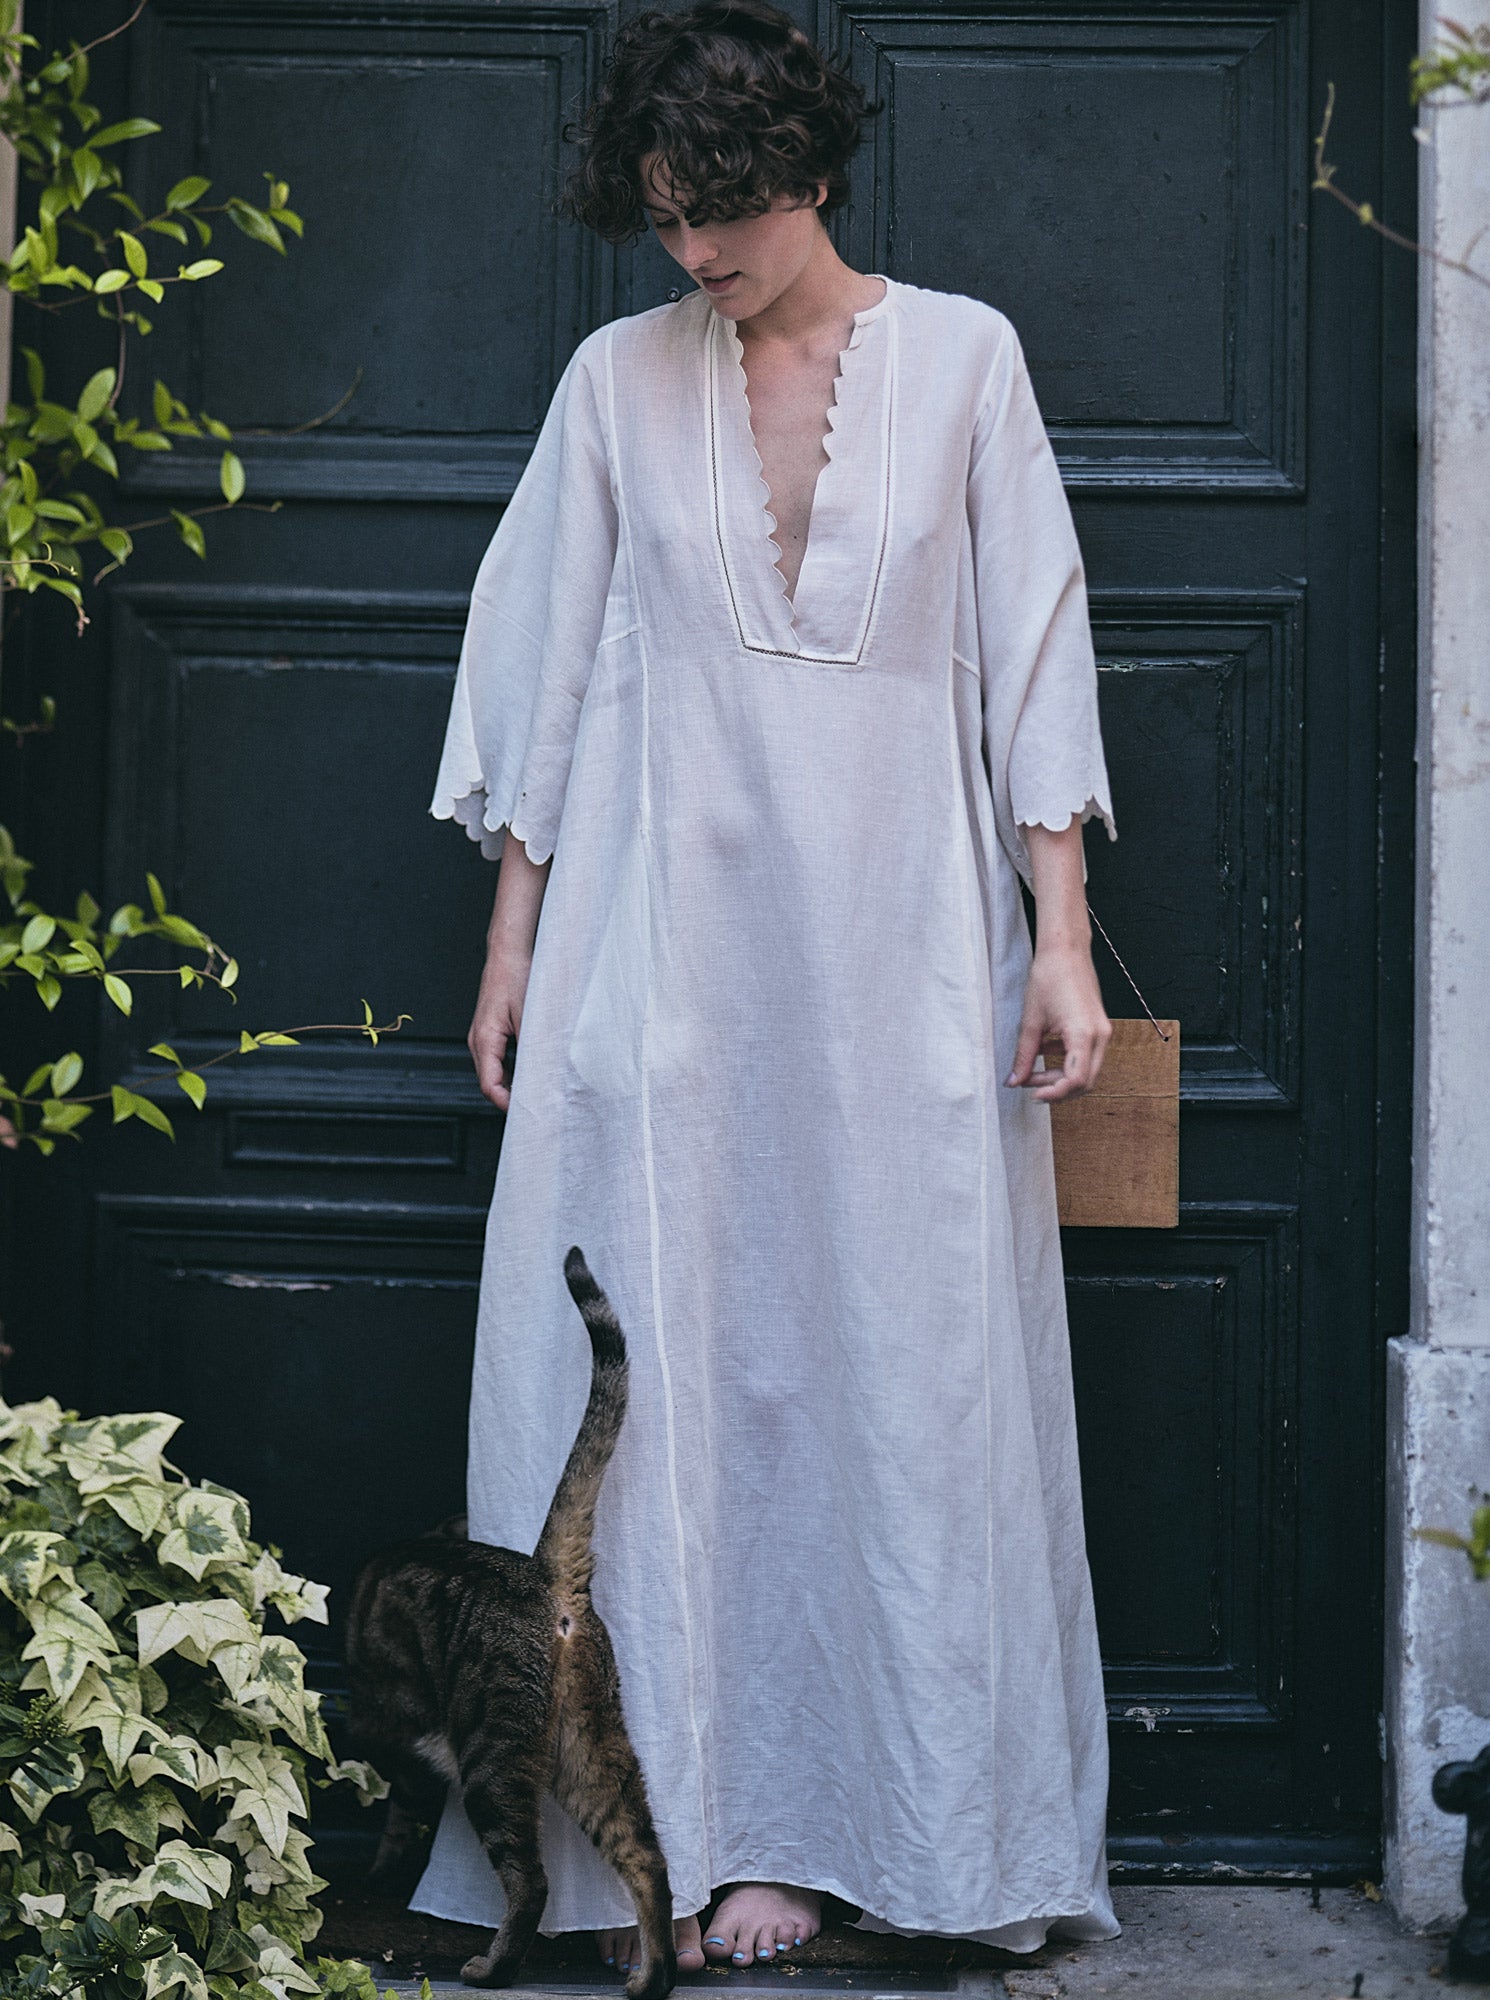 Paloma wearing Rachel white long Kaftan by Thierry Colson photographed by Stéphane Gautronneau